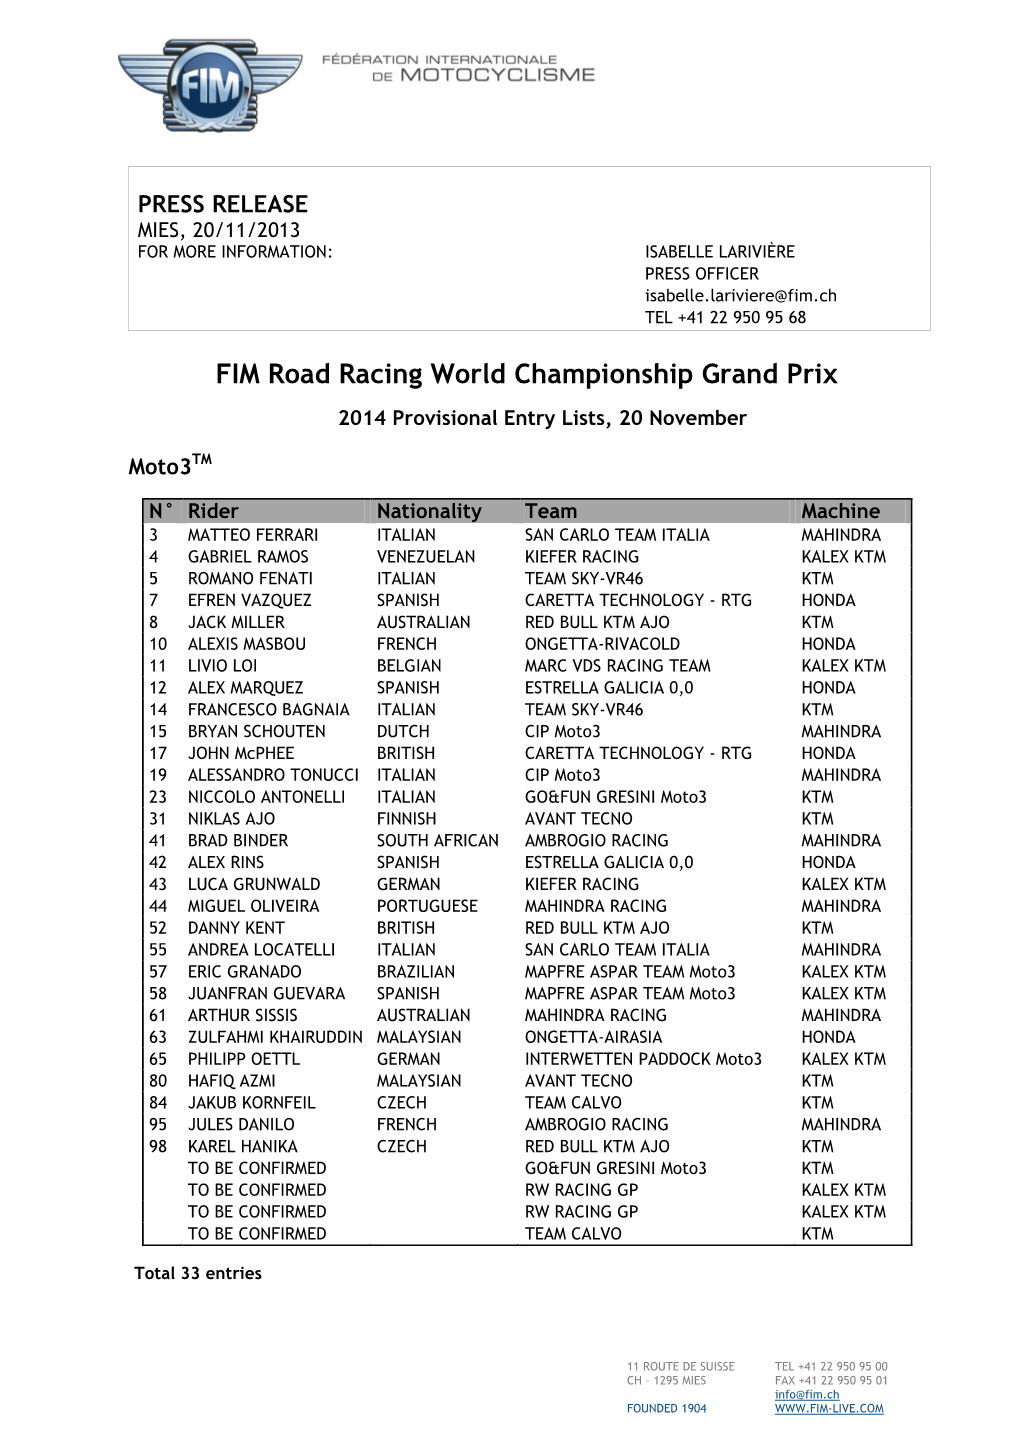 FIM Road Racing World Championship Grand Prix 2014 Provisional Entry Lists, 20 November